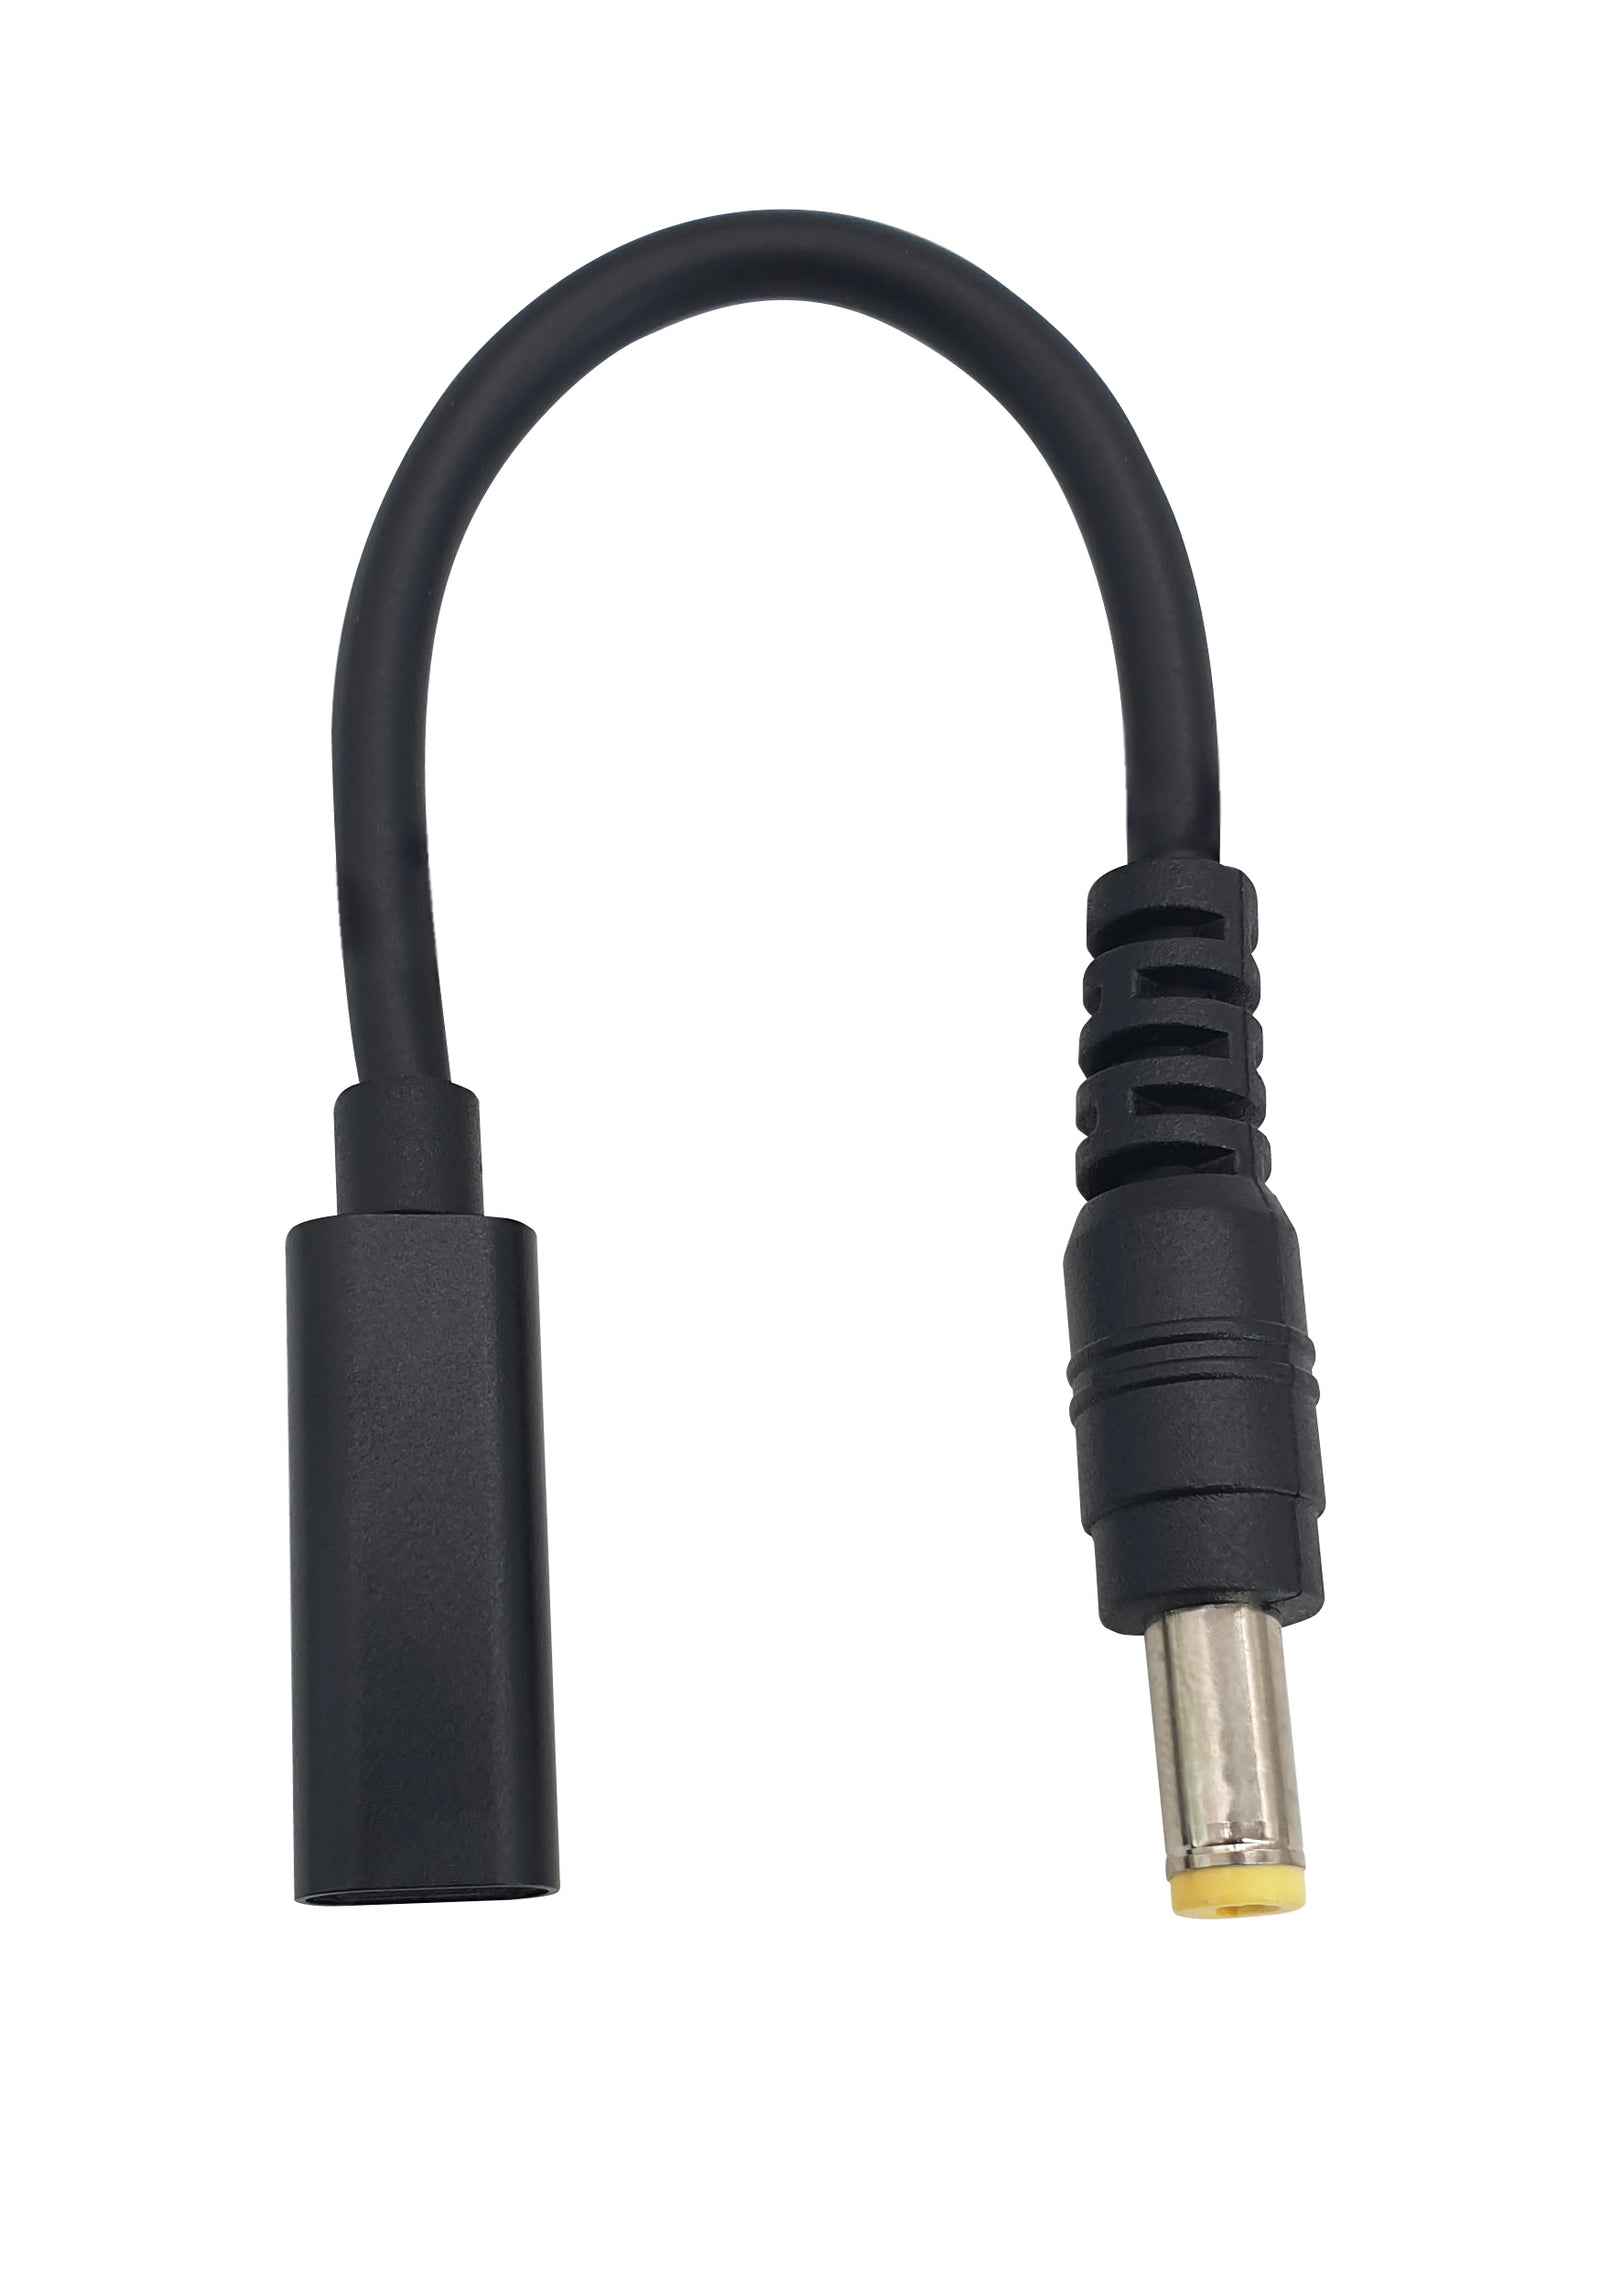 USB-C 3.1 to DC 5.5*2.5mm power converter